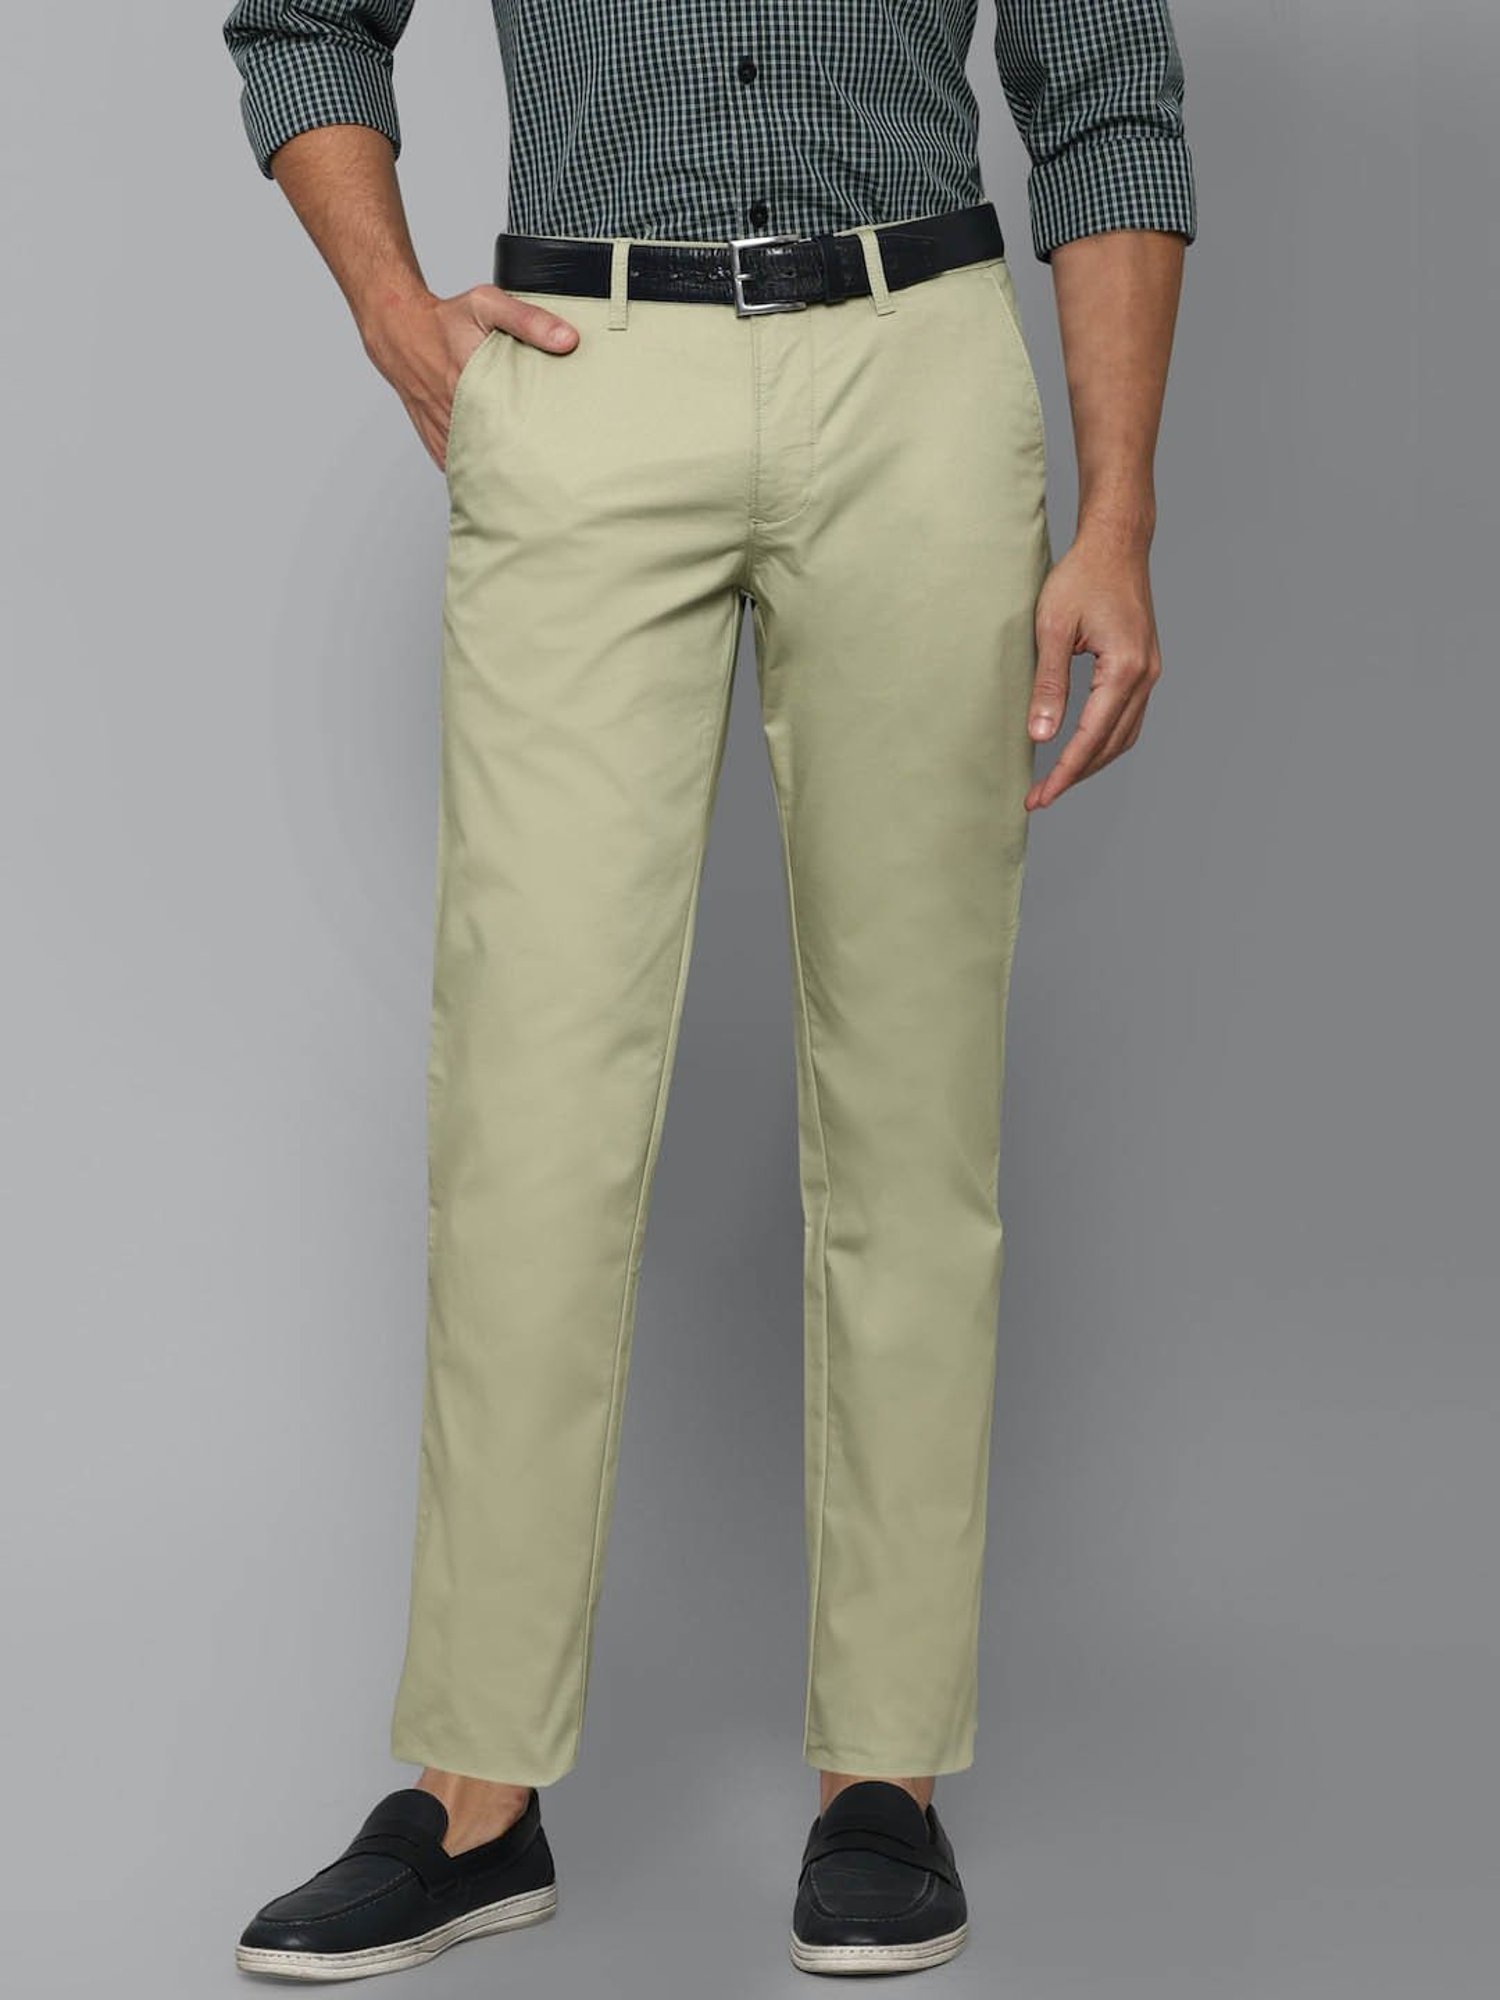 Buy Men Grey Solid Casual Jogger Pants Online - 601390 | Louis Philippe